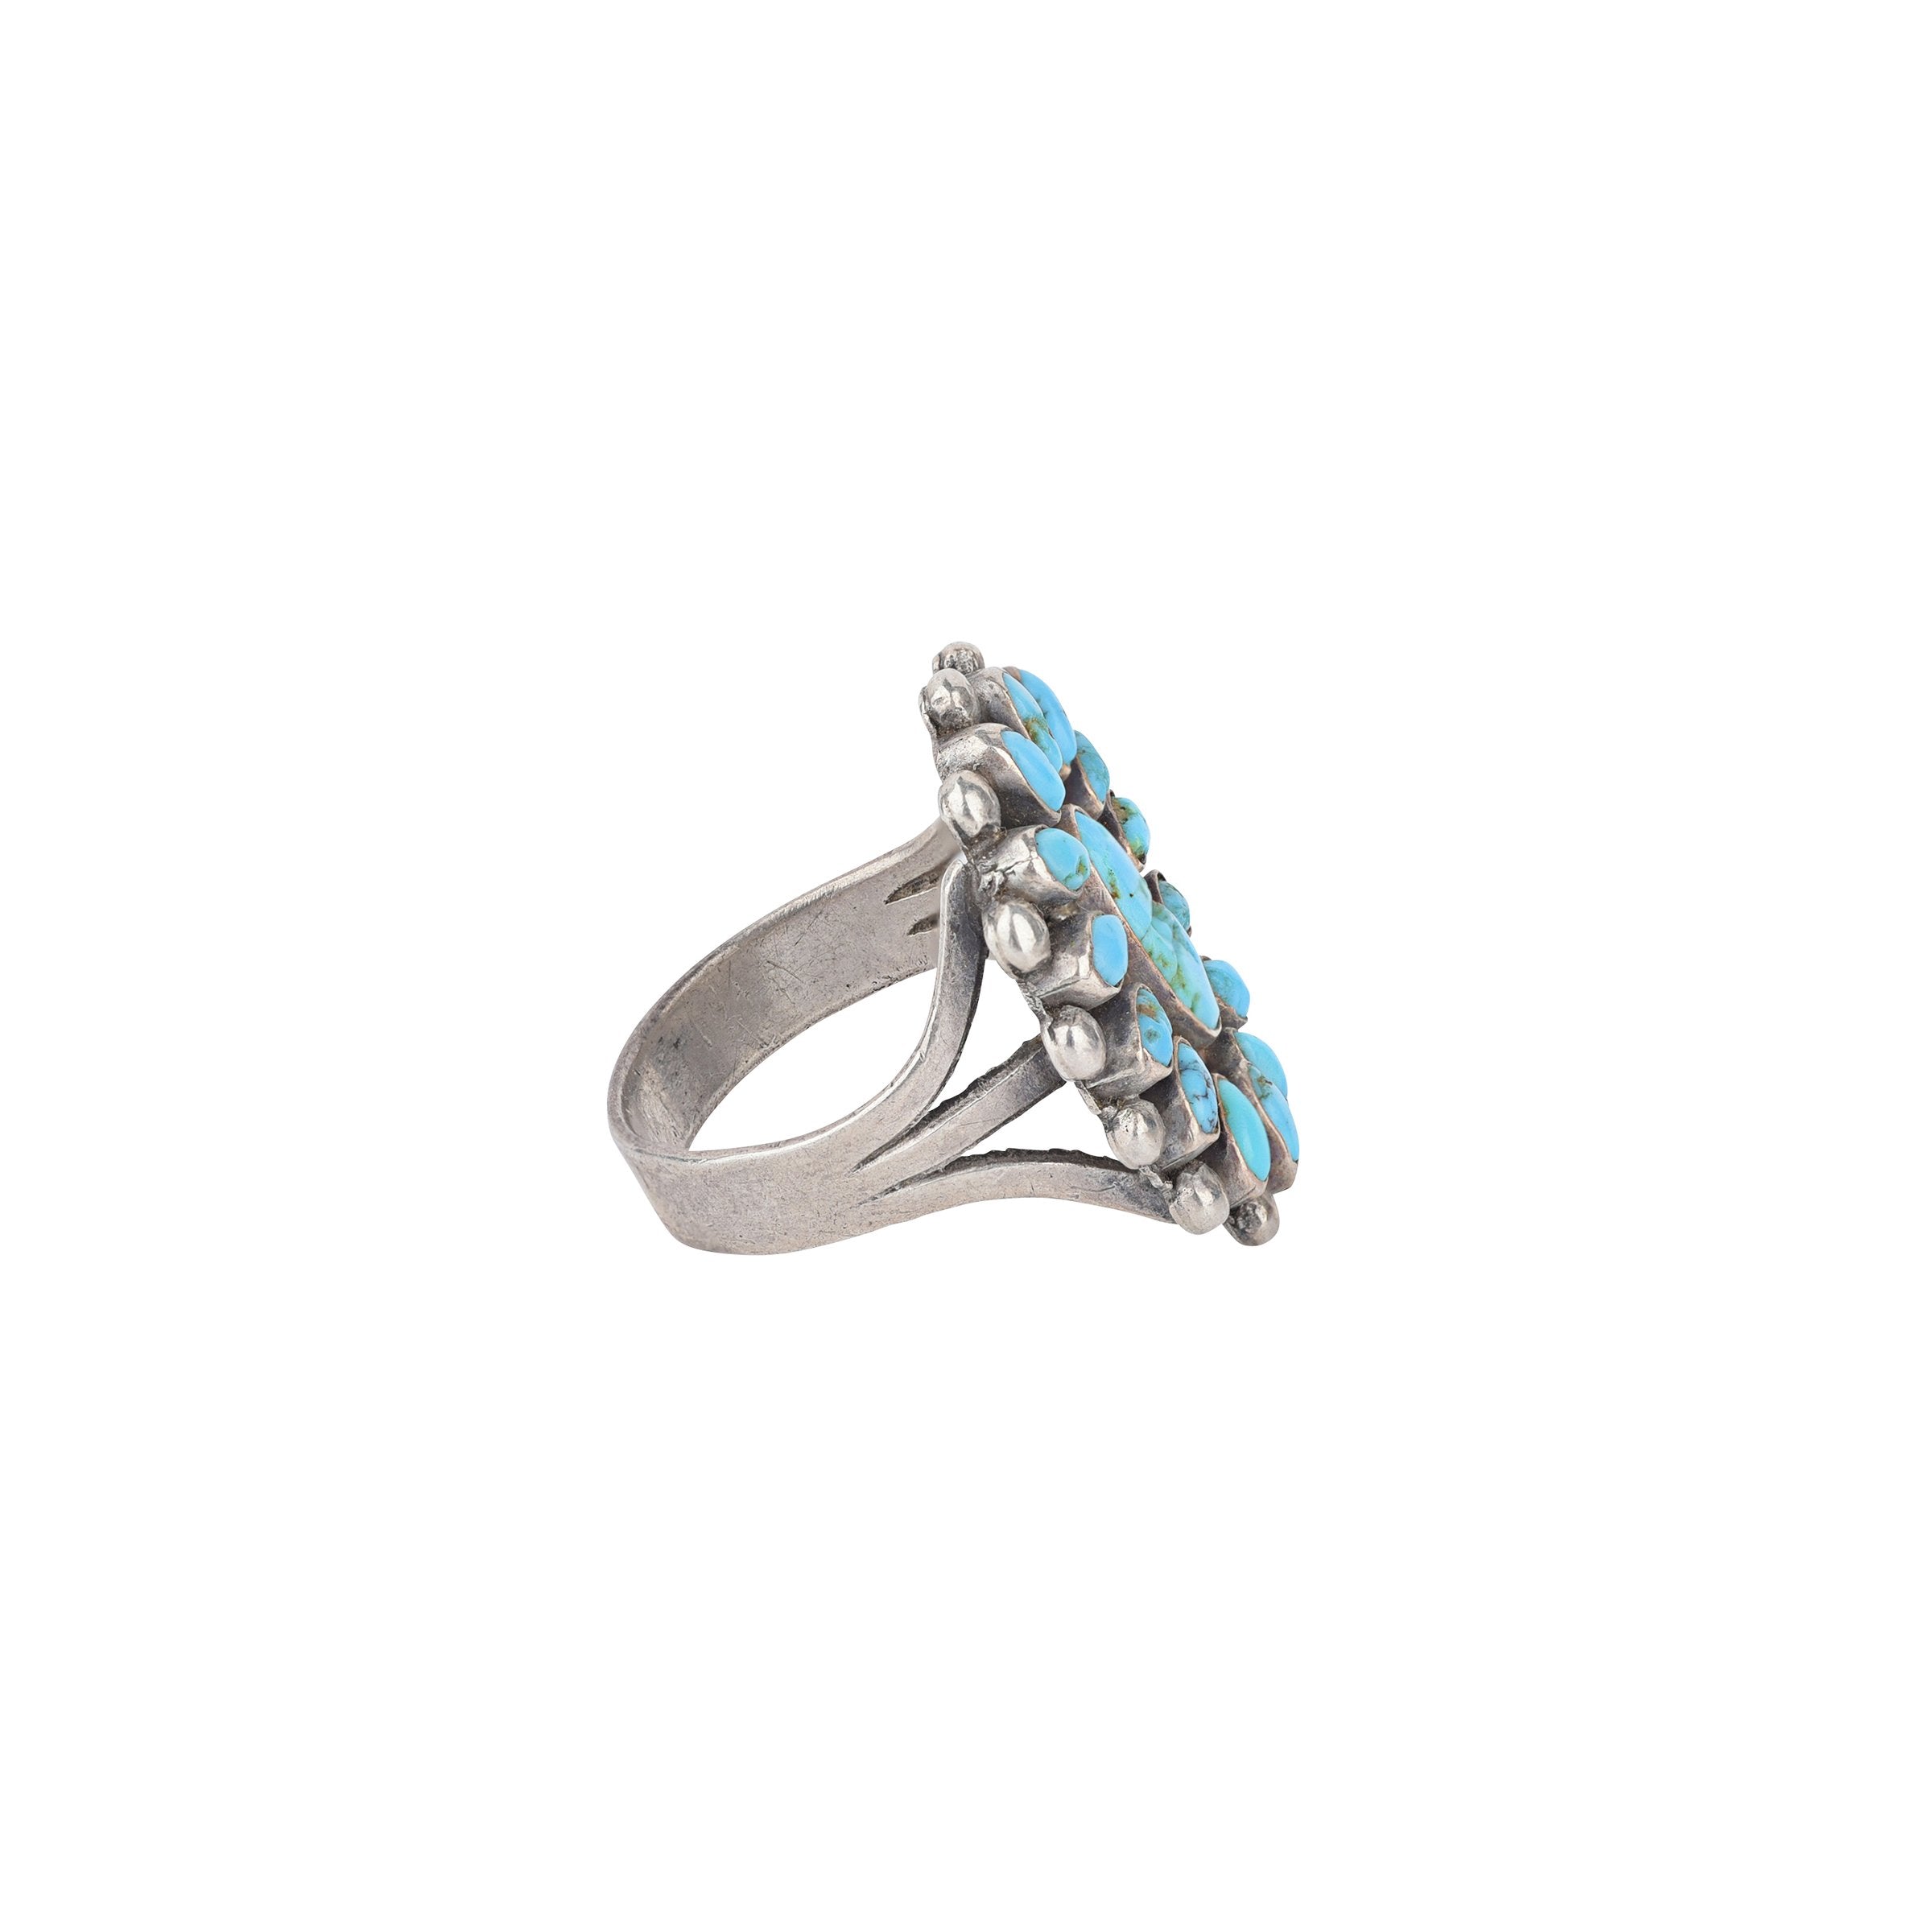 Vintage Zuni Turquoise Ring, c. 1940 - Size 8 7/8